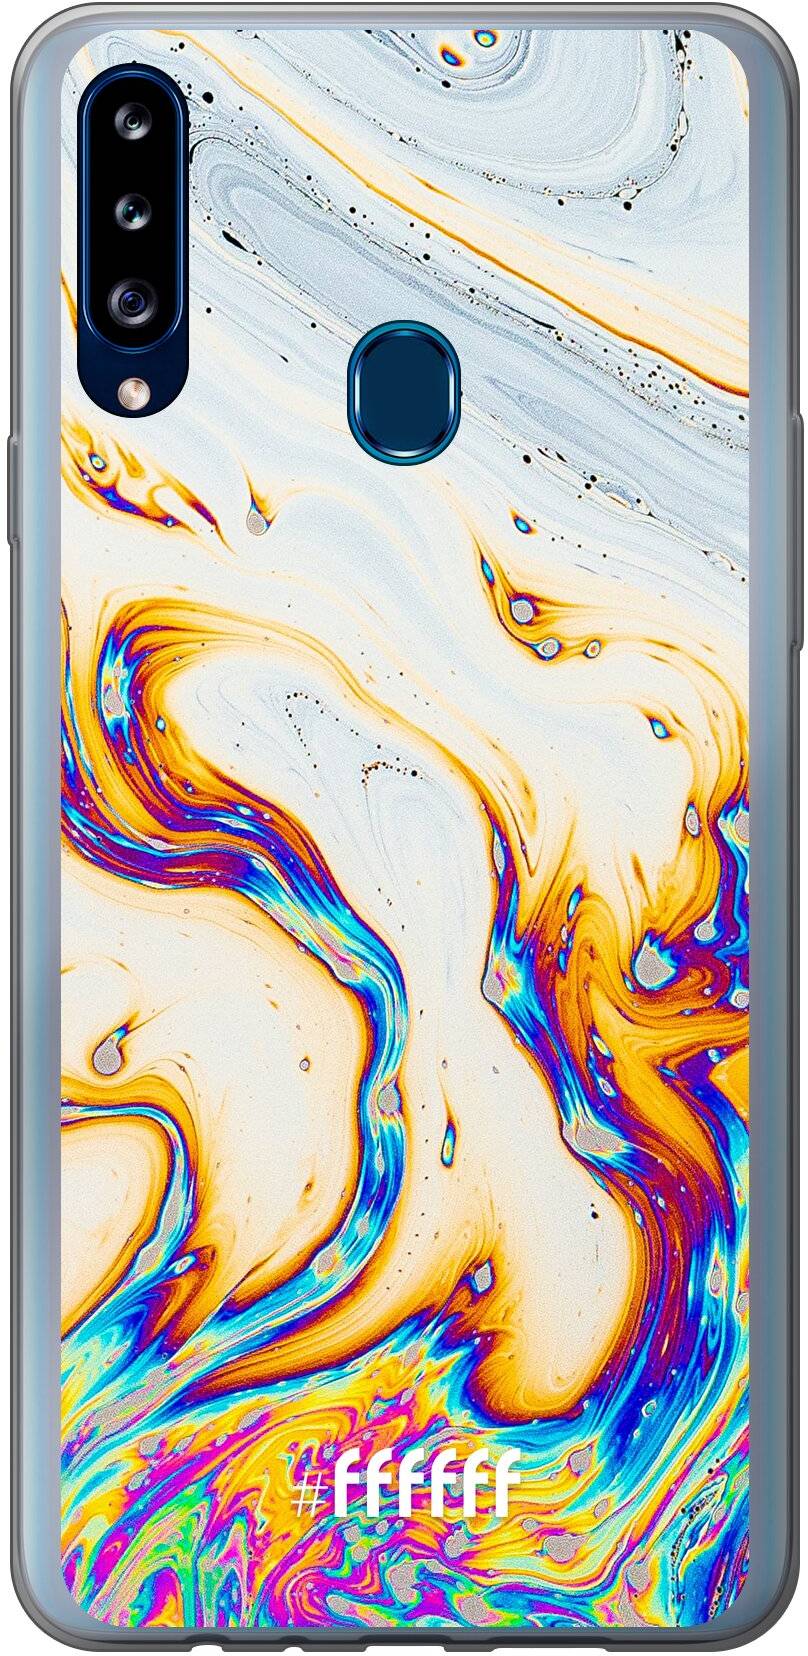 Bubble Texture Galaxy A20s